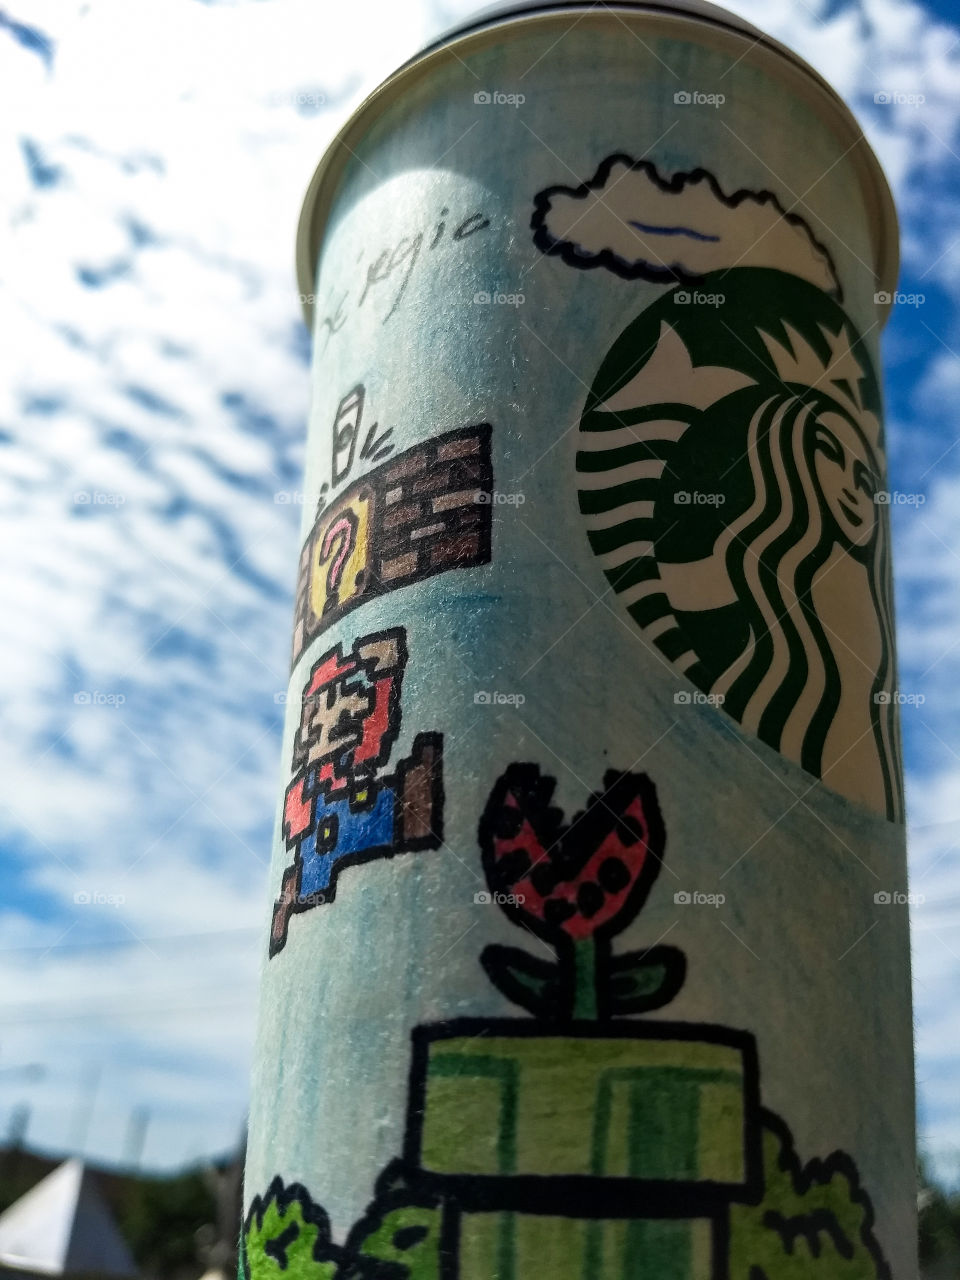 Mario's like Coffee Starbucks